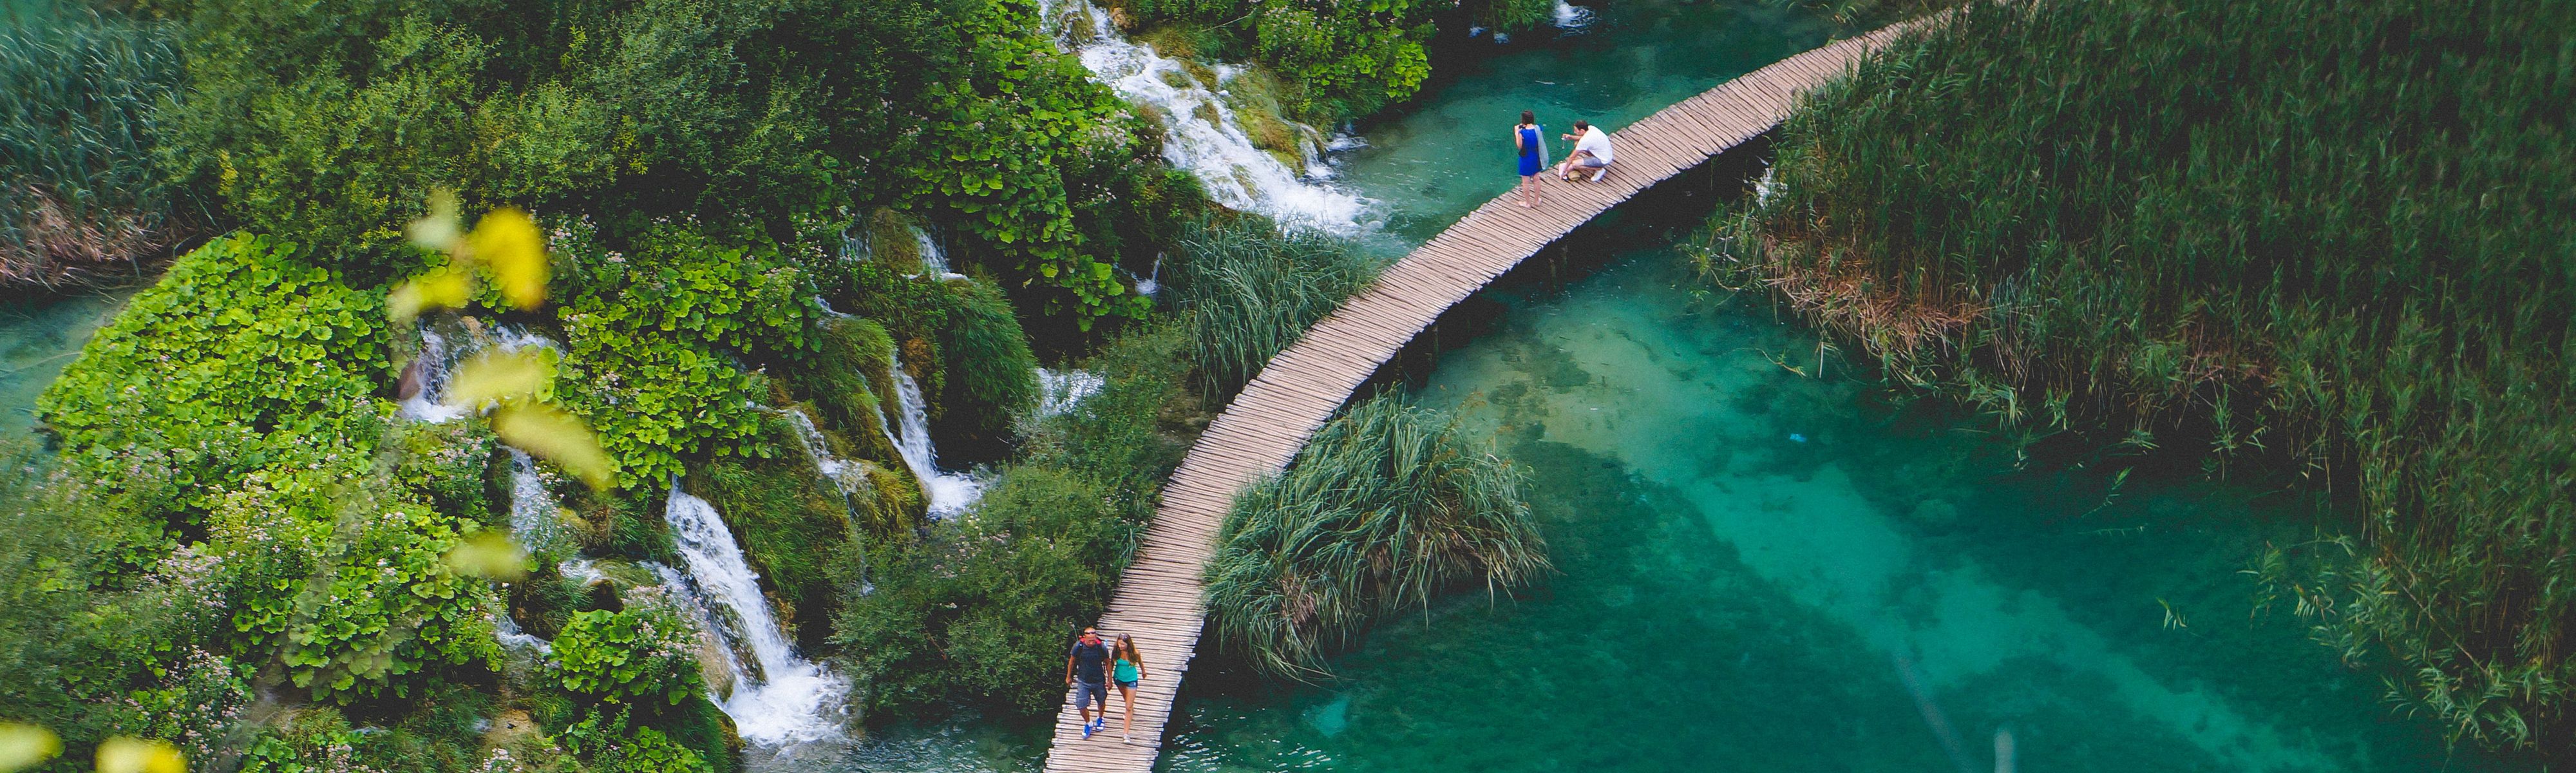 people walking along wooden bridge in Plitvice lakes national park in croatia